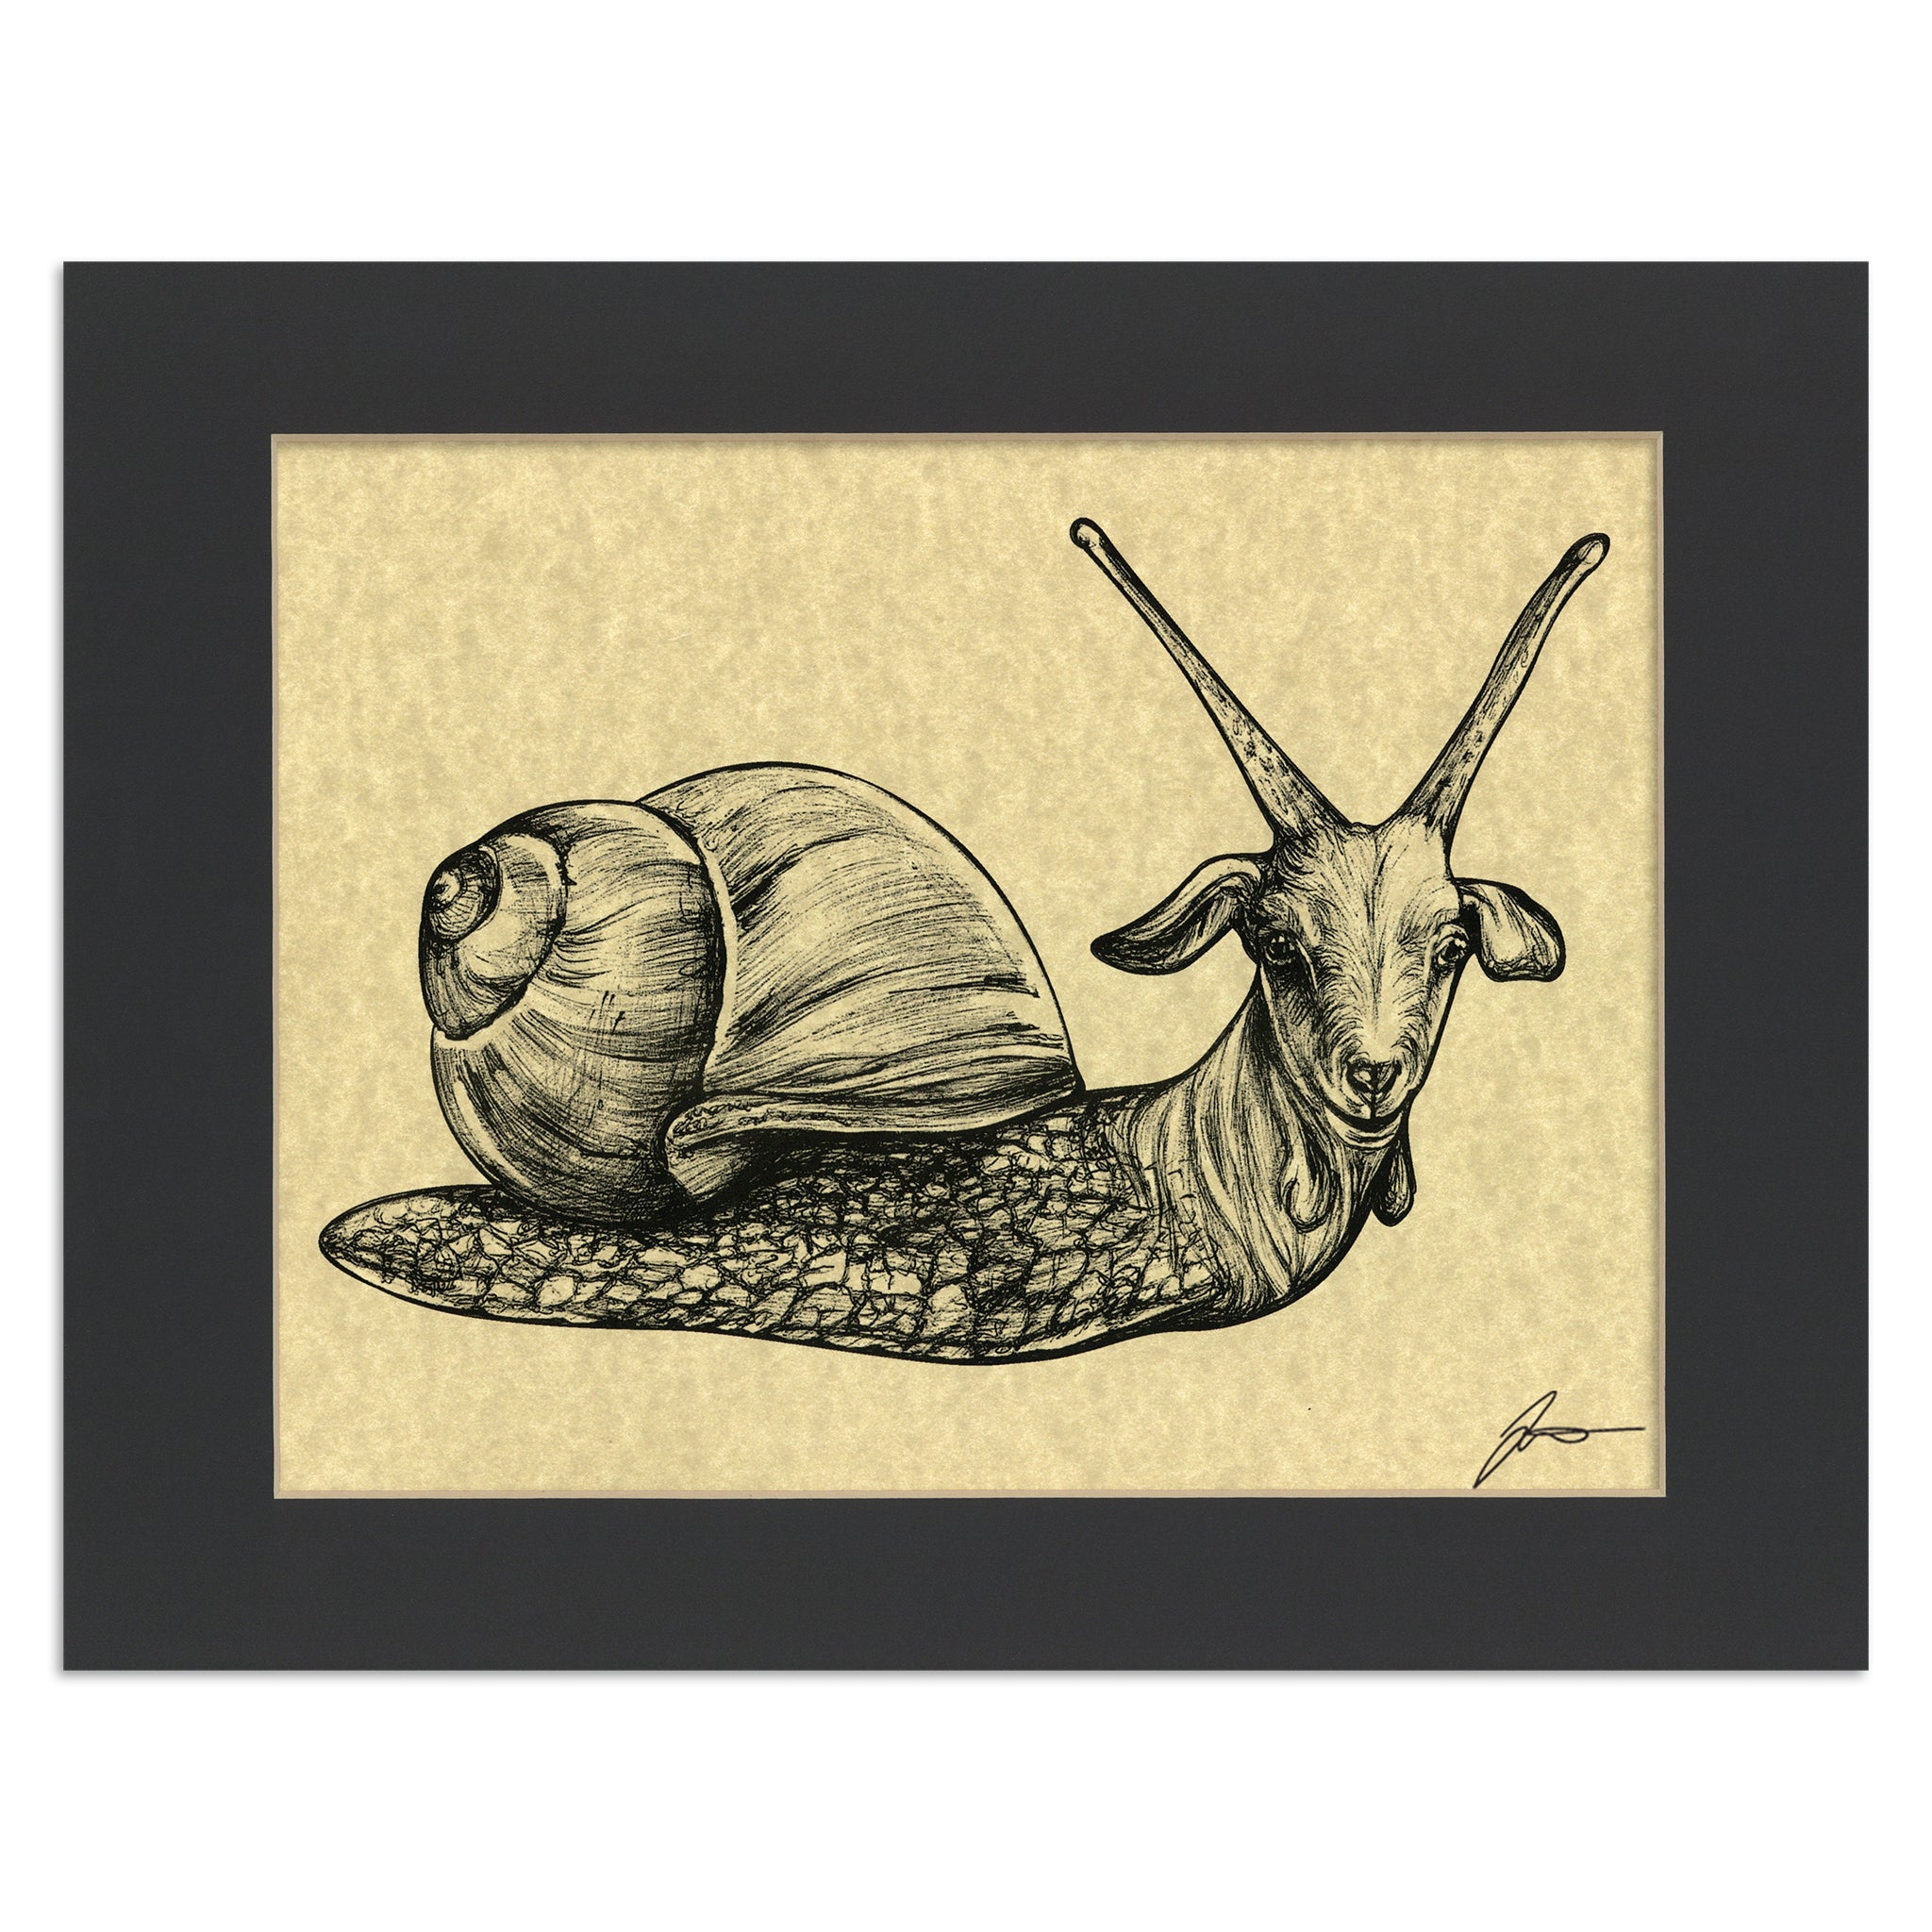 Escargoat | Goat + Snail Hybrid Animal | 11x14" Parchment Print